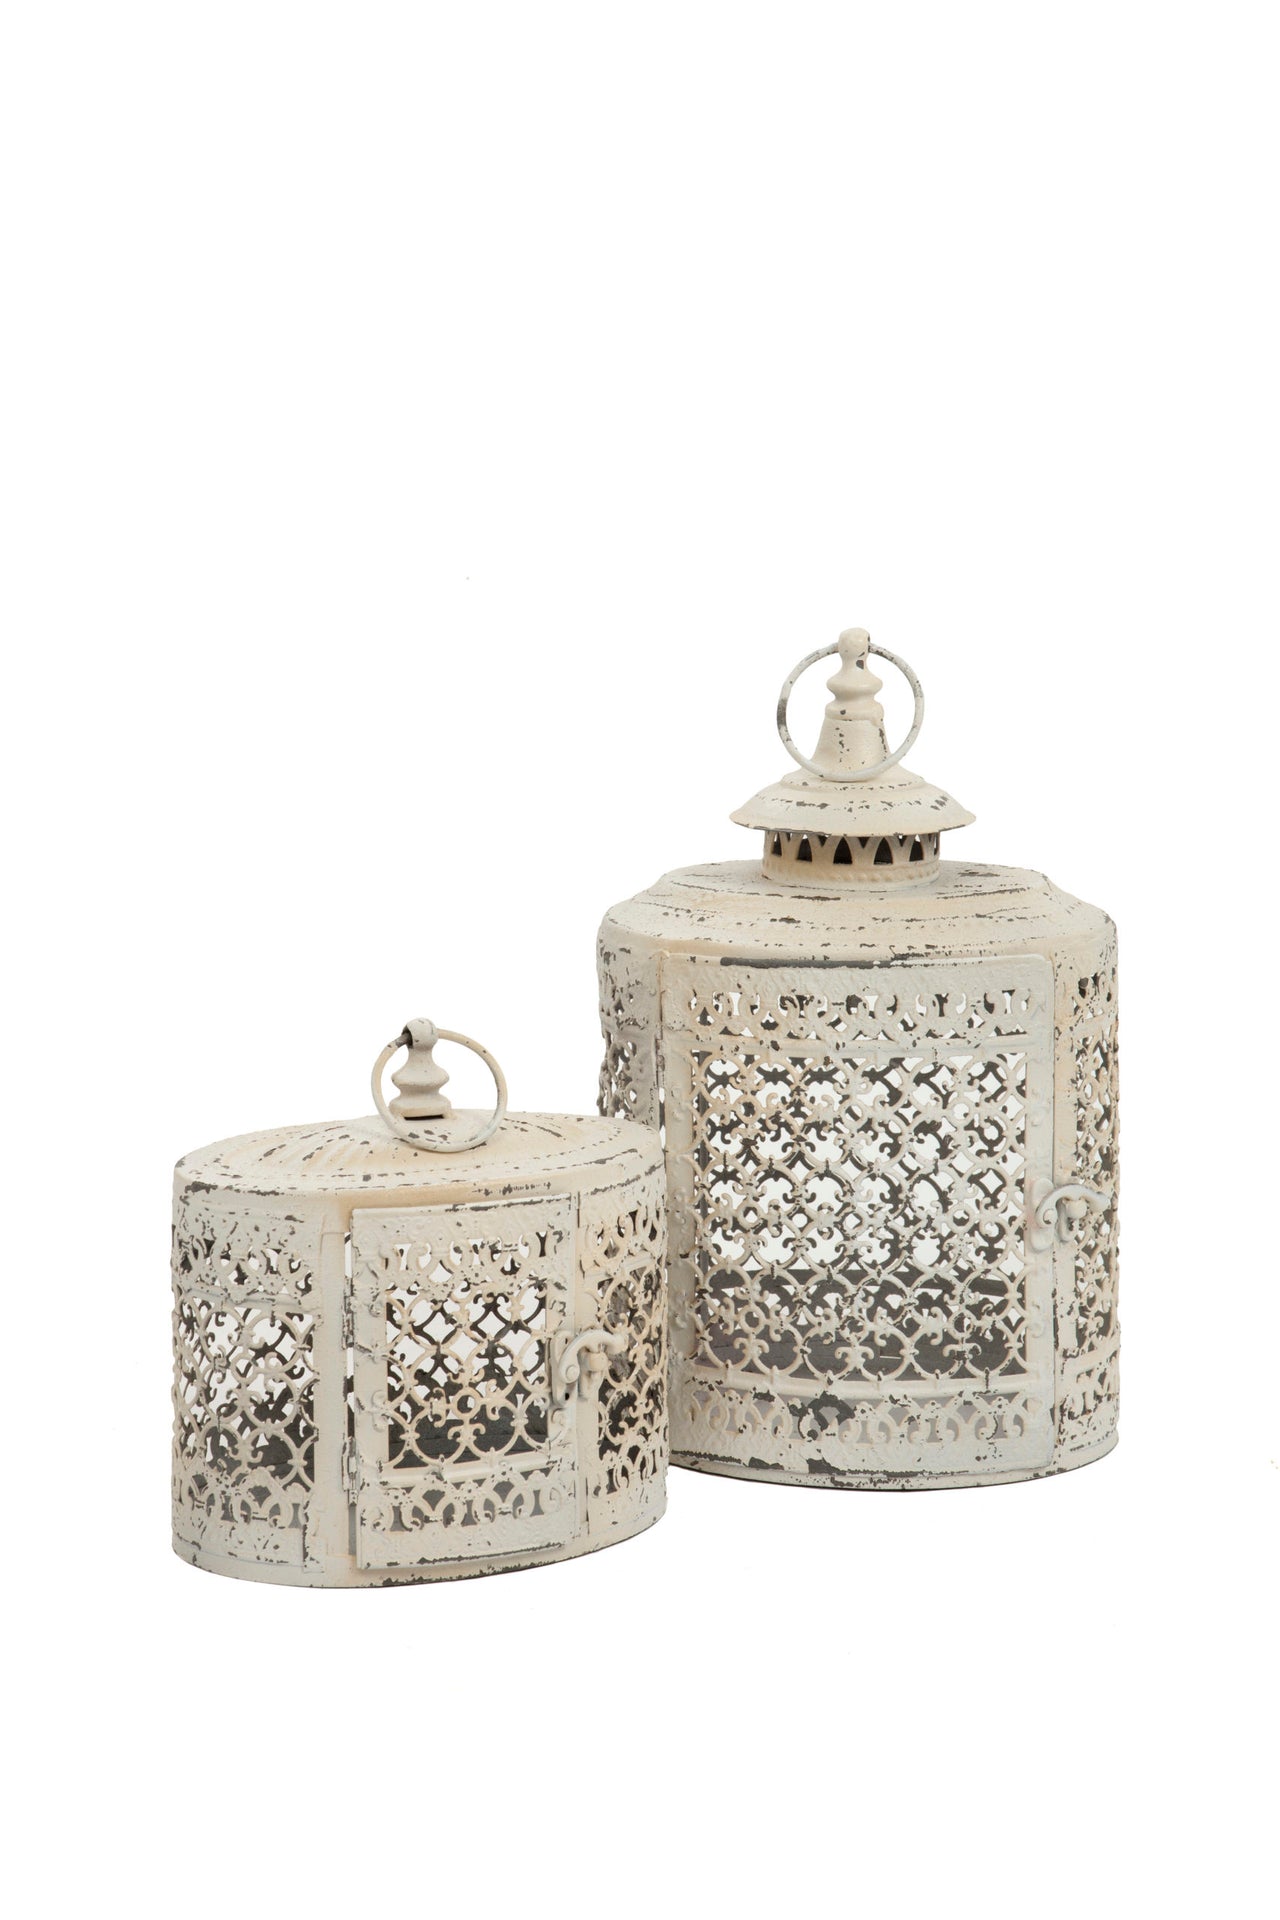 London Ornaments Moorish Oval Single Lanterns Antique White